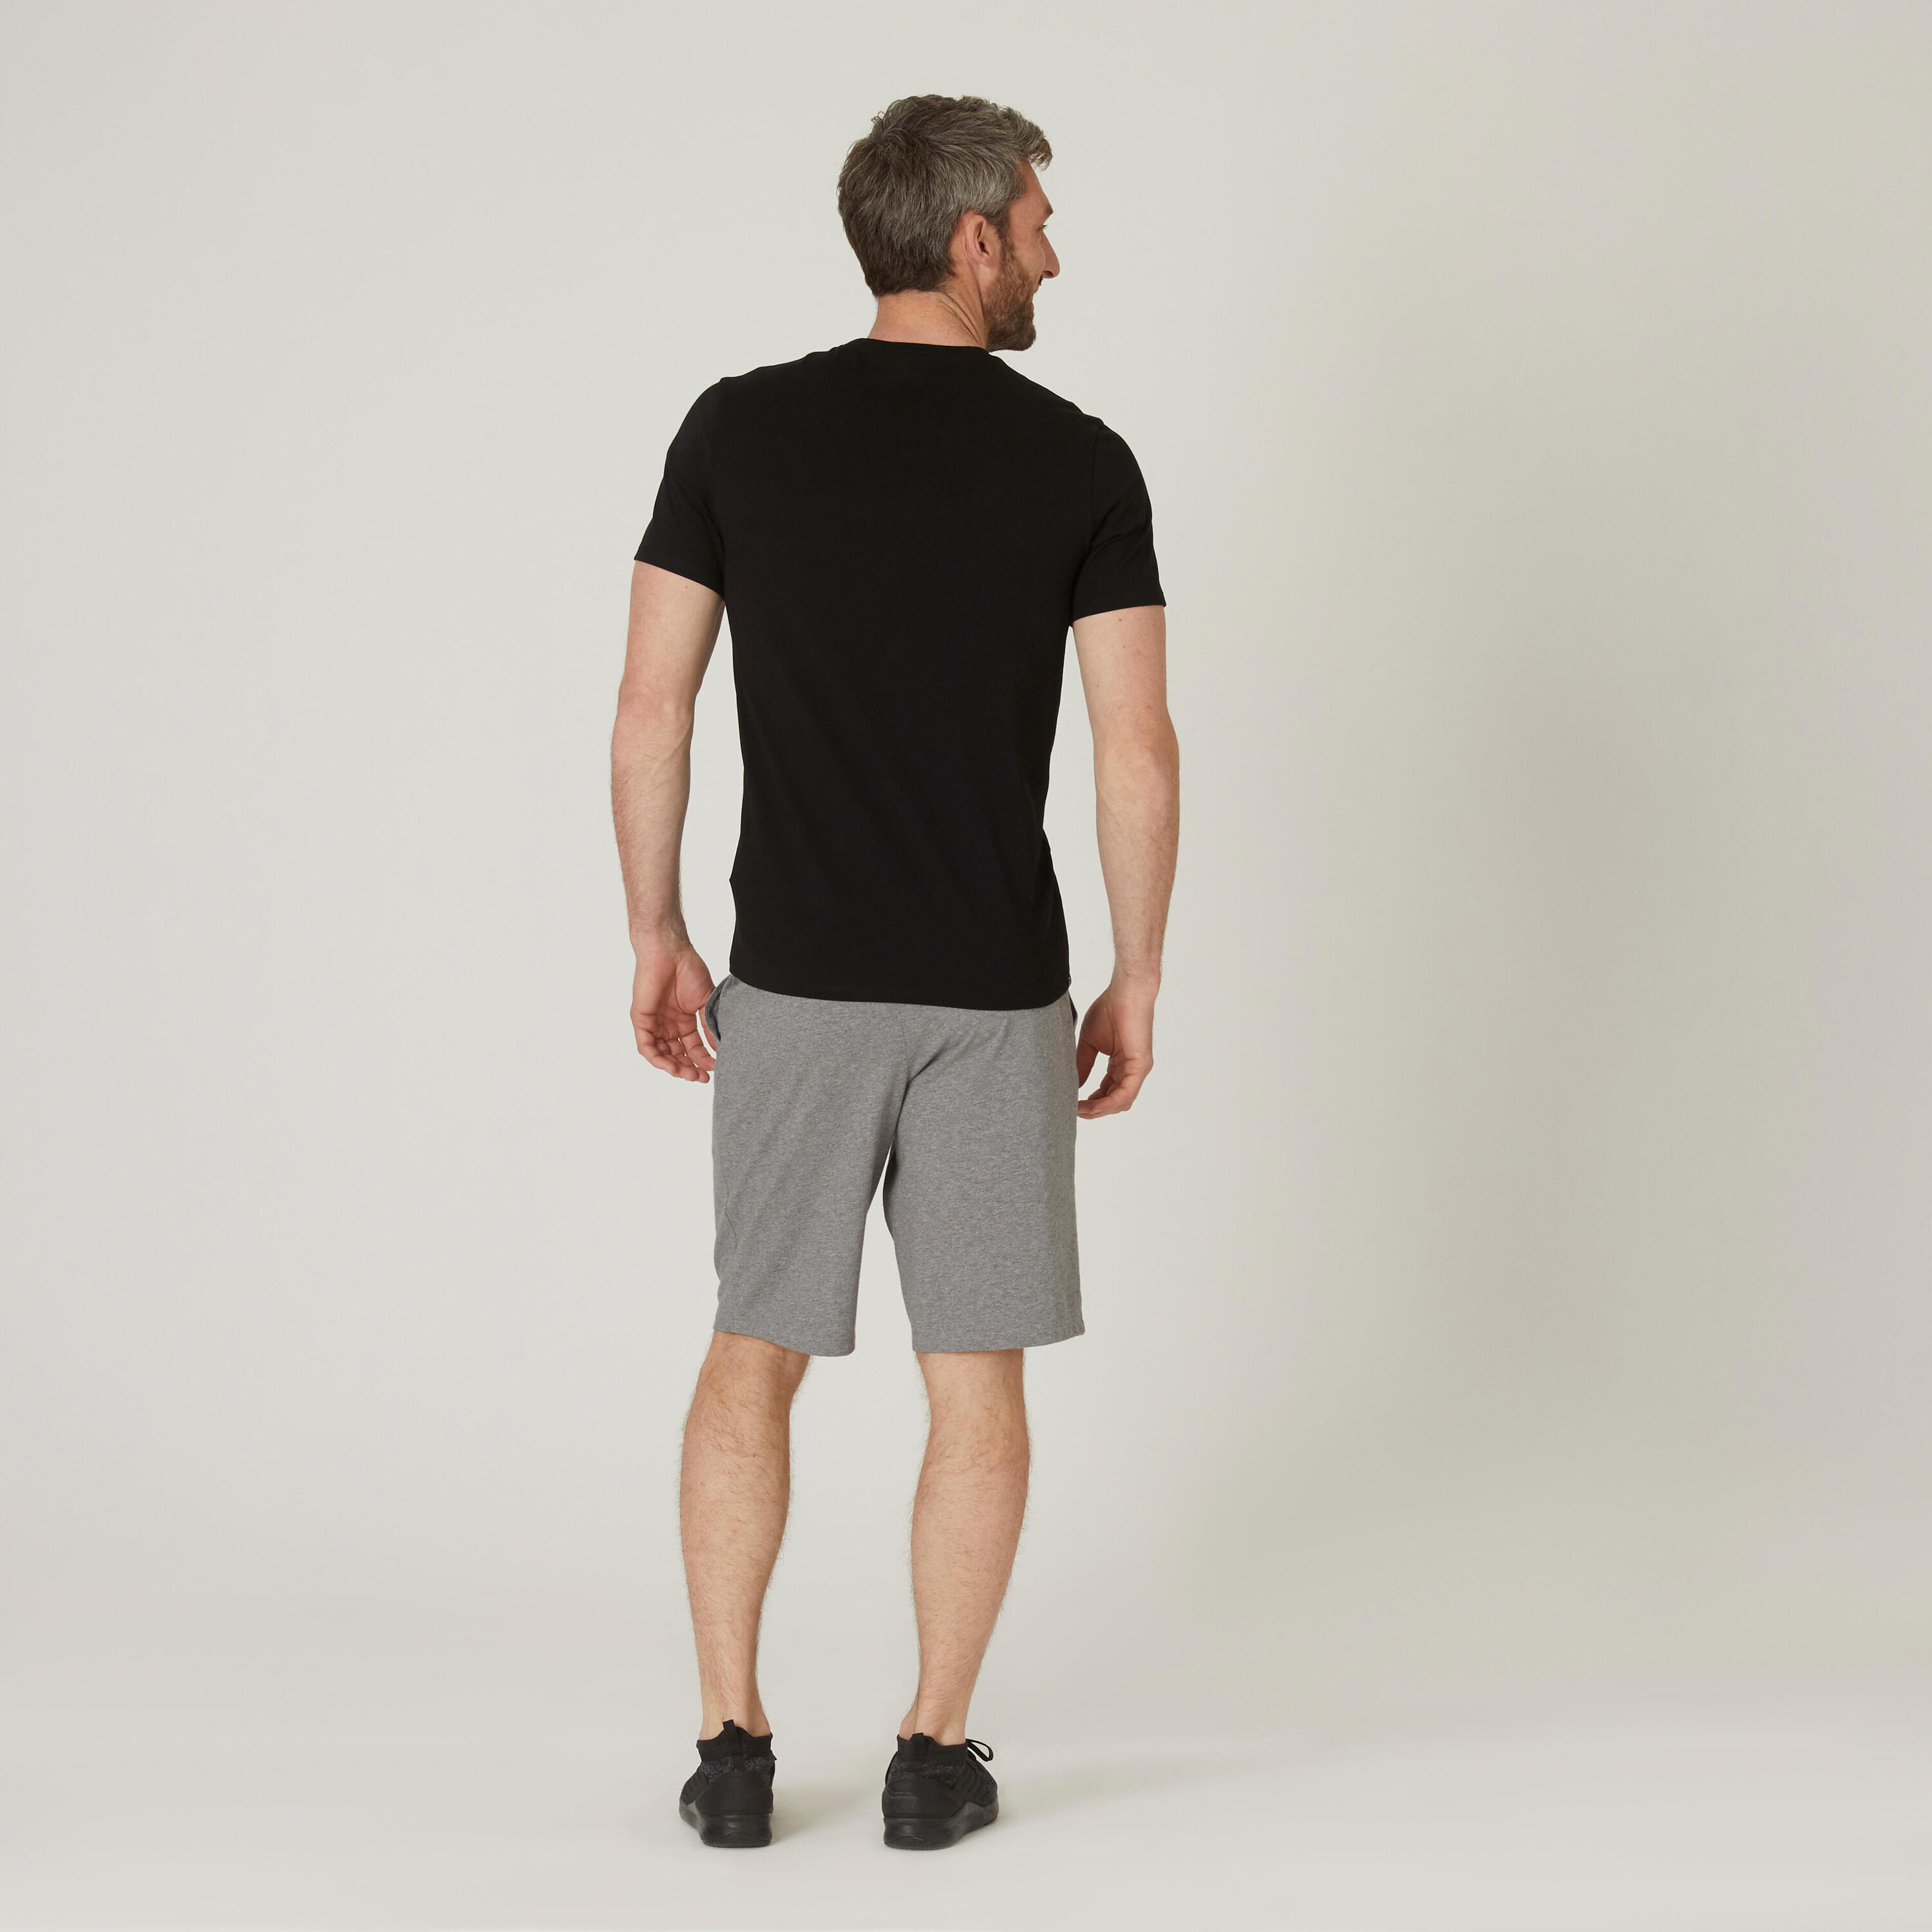 Men's Slim-Fit Fitness T-Shirt 500 - Black 8/19